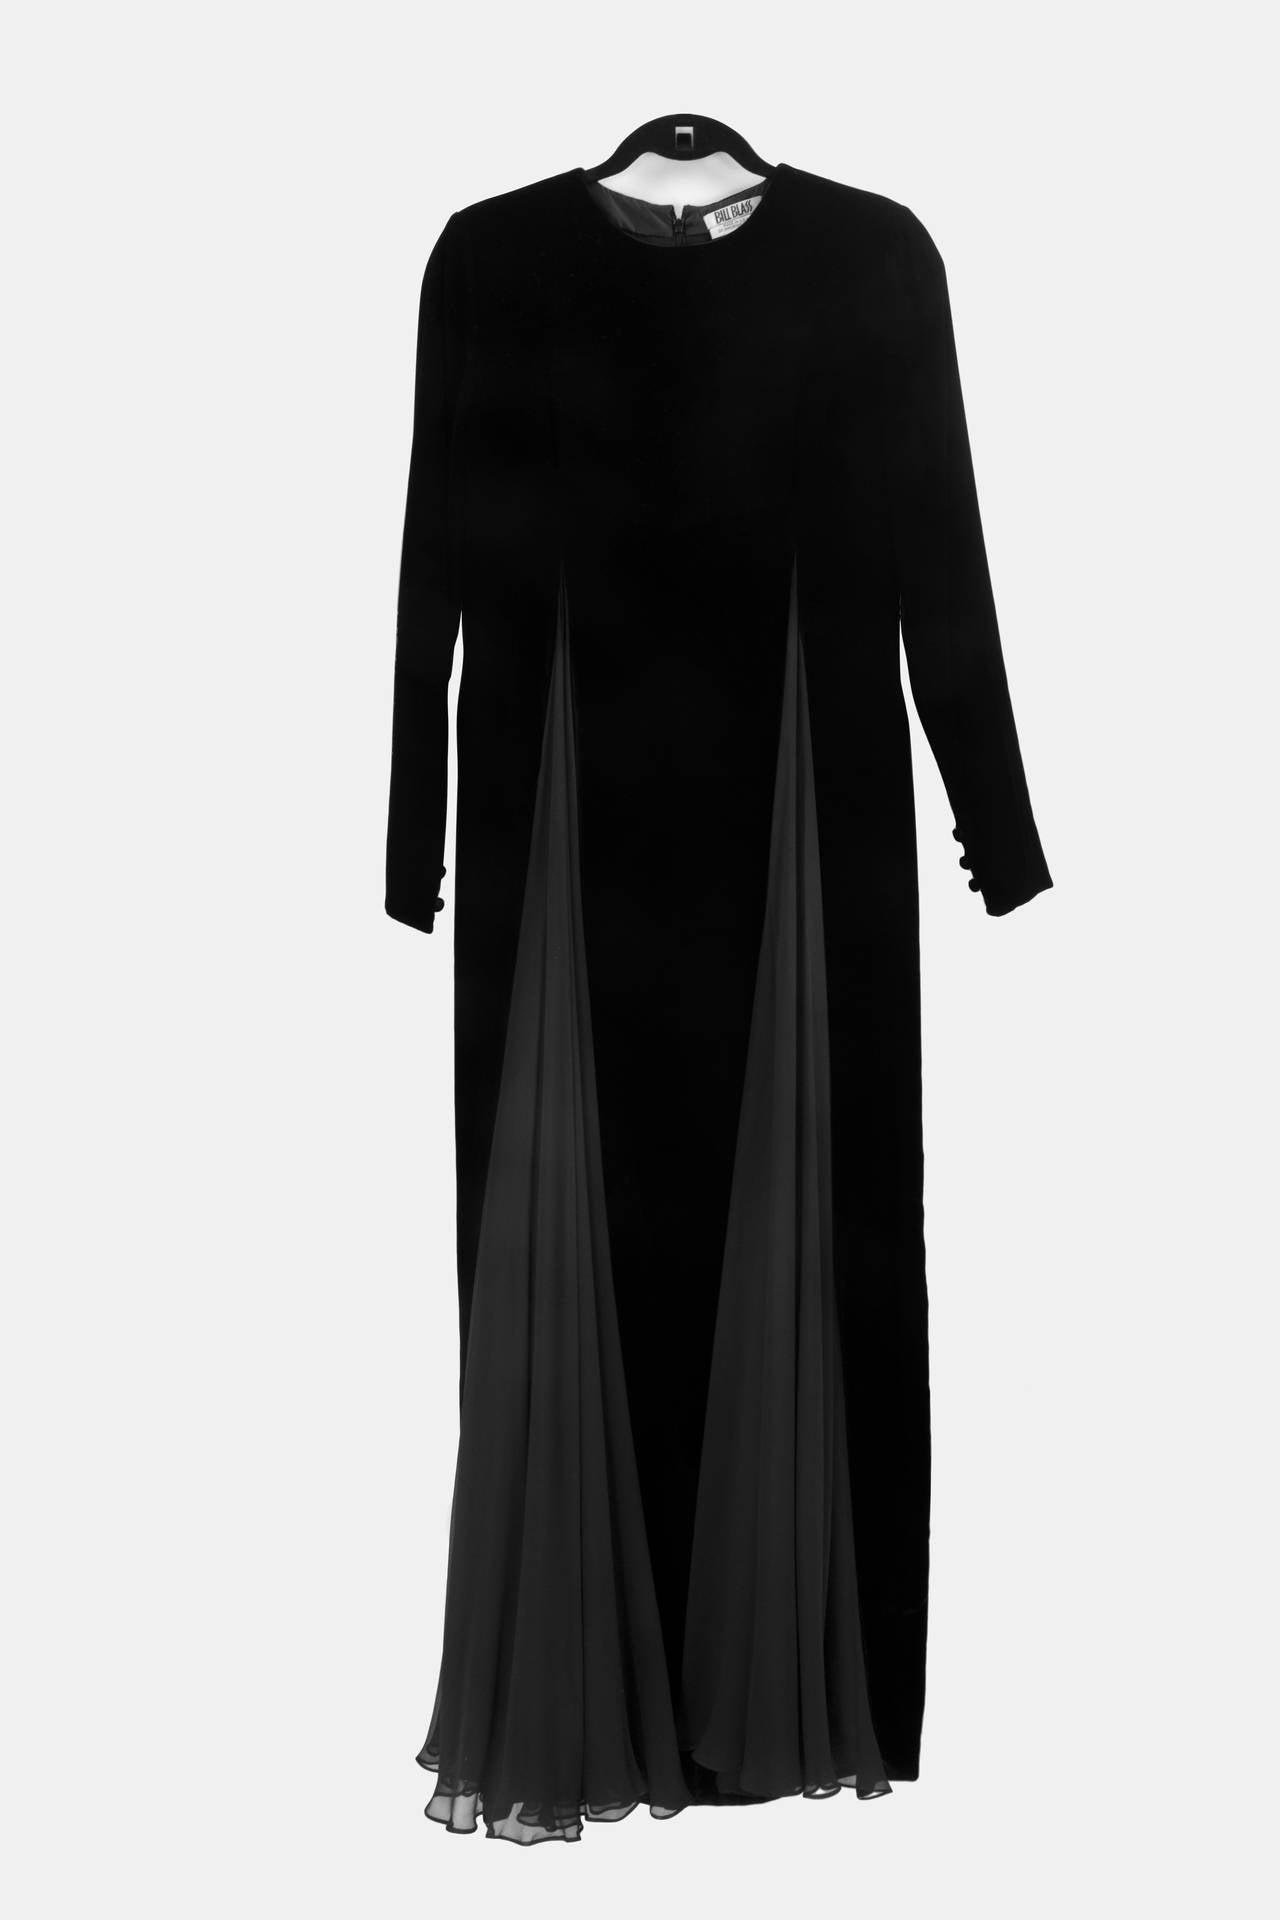 Vintage Bill Blass Black Velvet and Silk Evening Dress 2